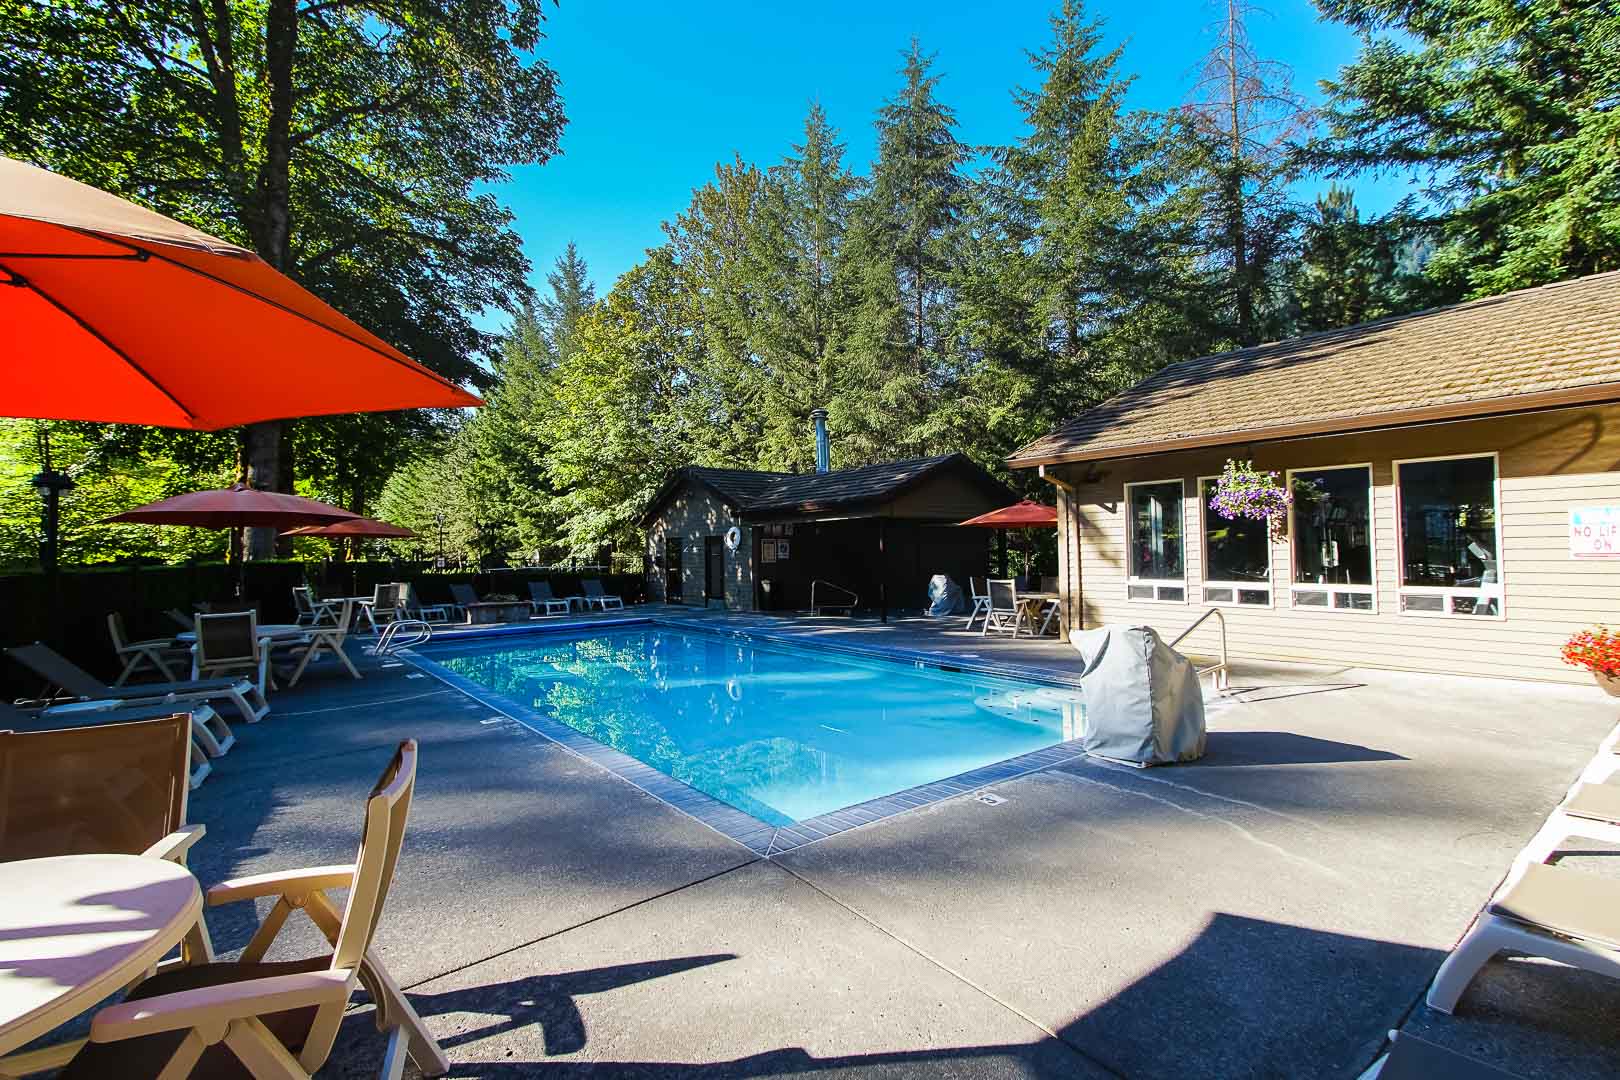 A crisp outdoor swimming pool at VRI's Whispering Woods Resort in Oregon.